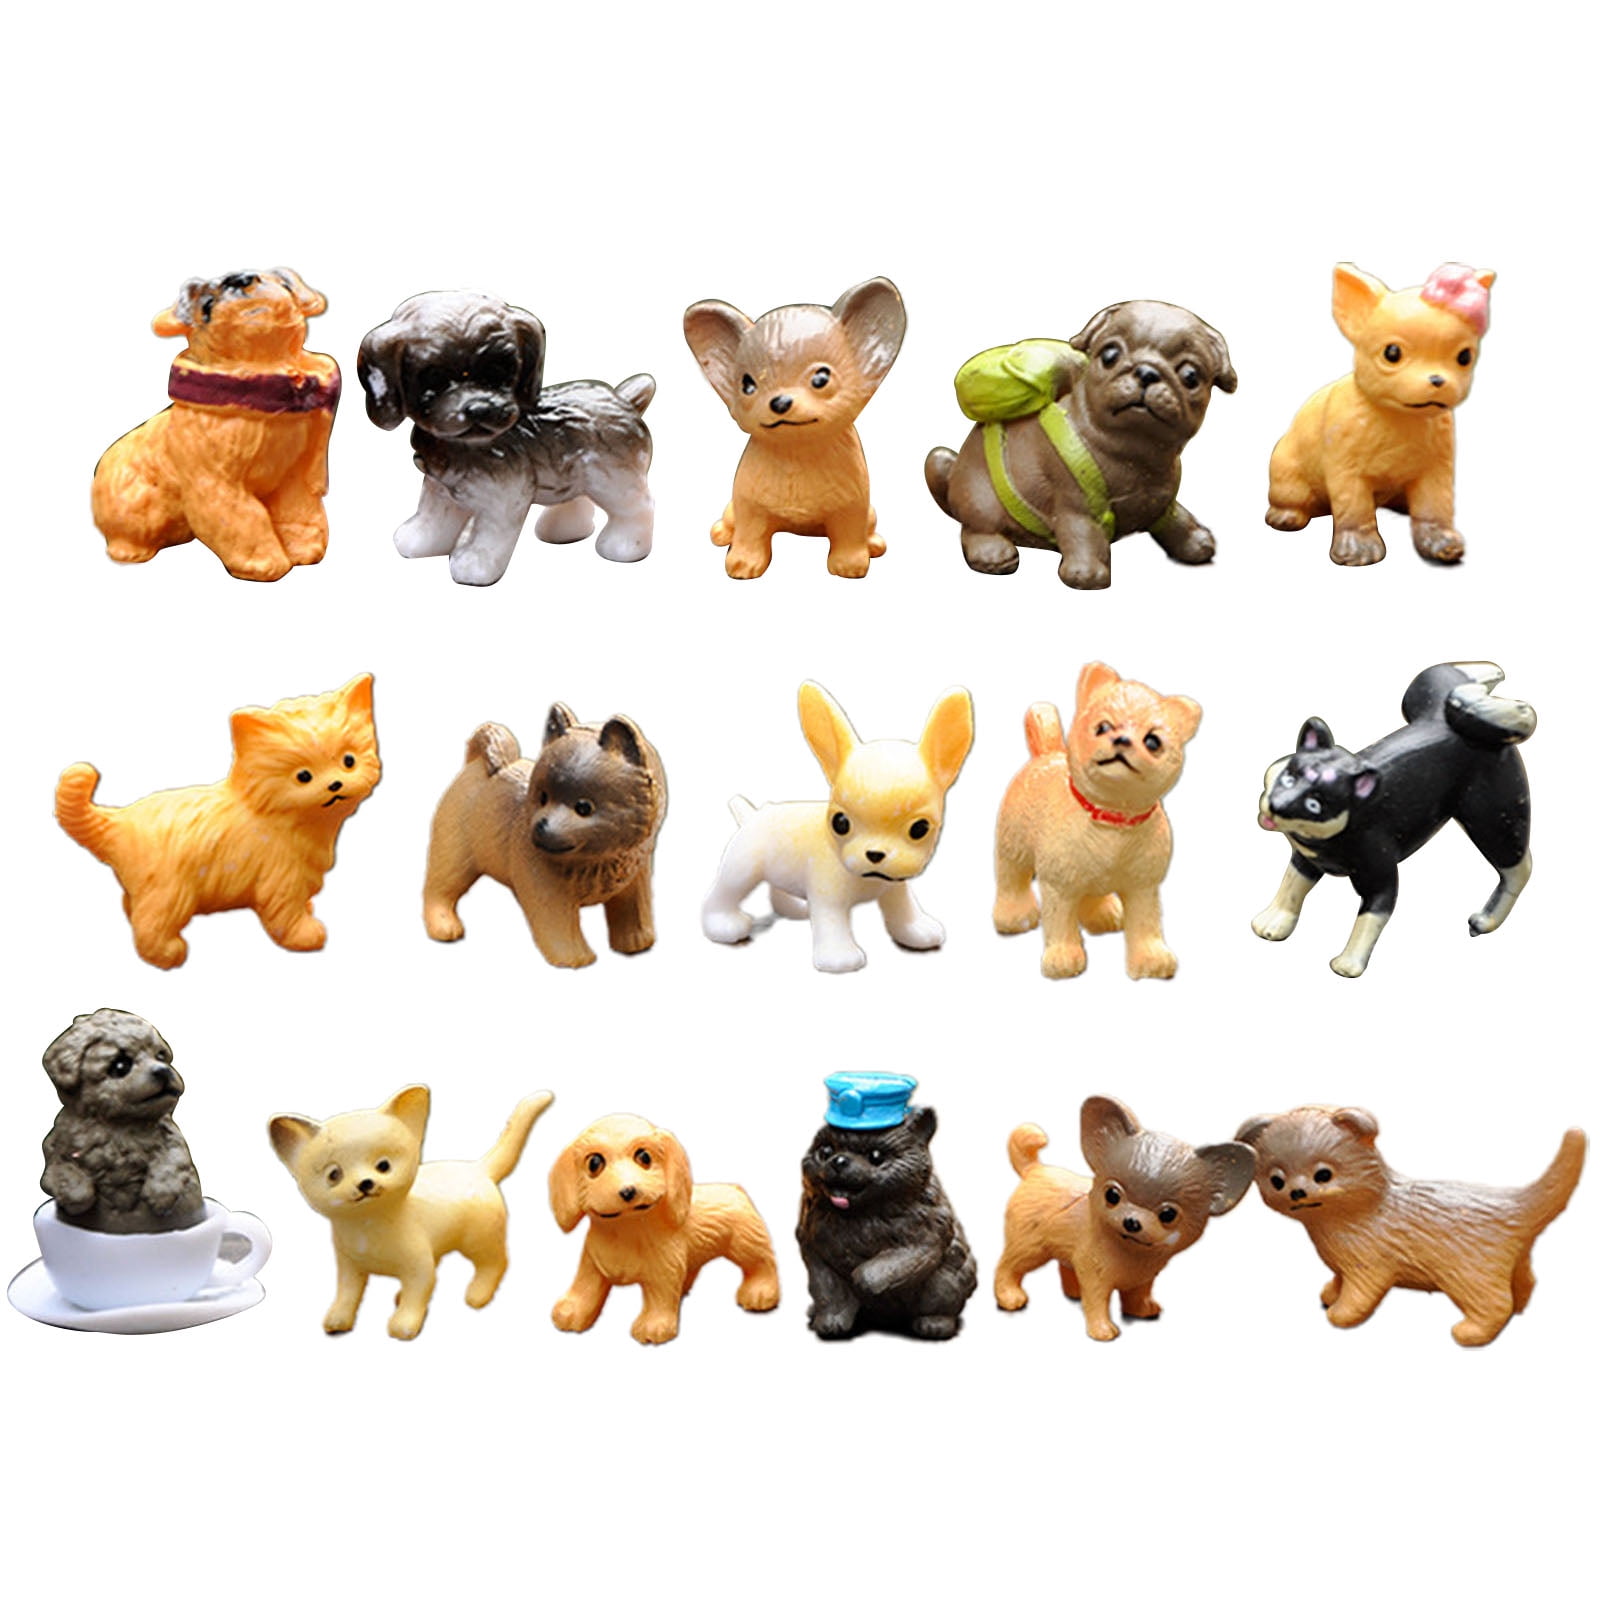 Details about   1x Plastic Dog Animal Model Ornaments Desktop Decor Kid Children Educational Toy 